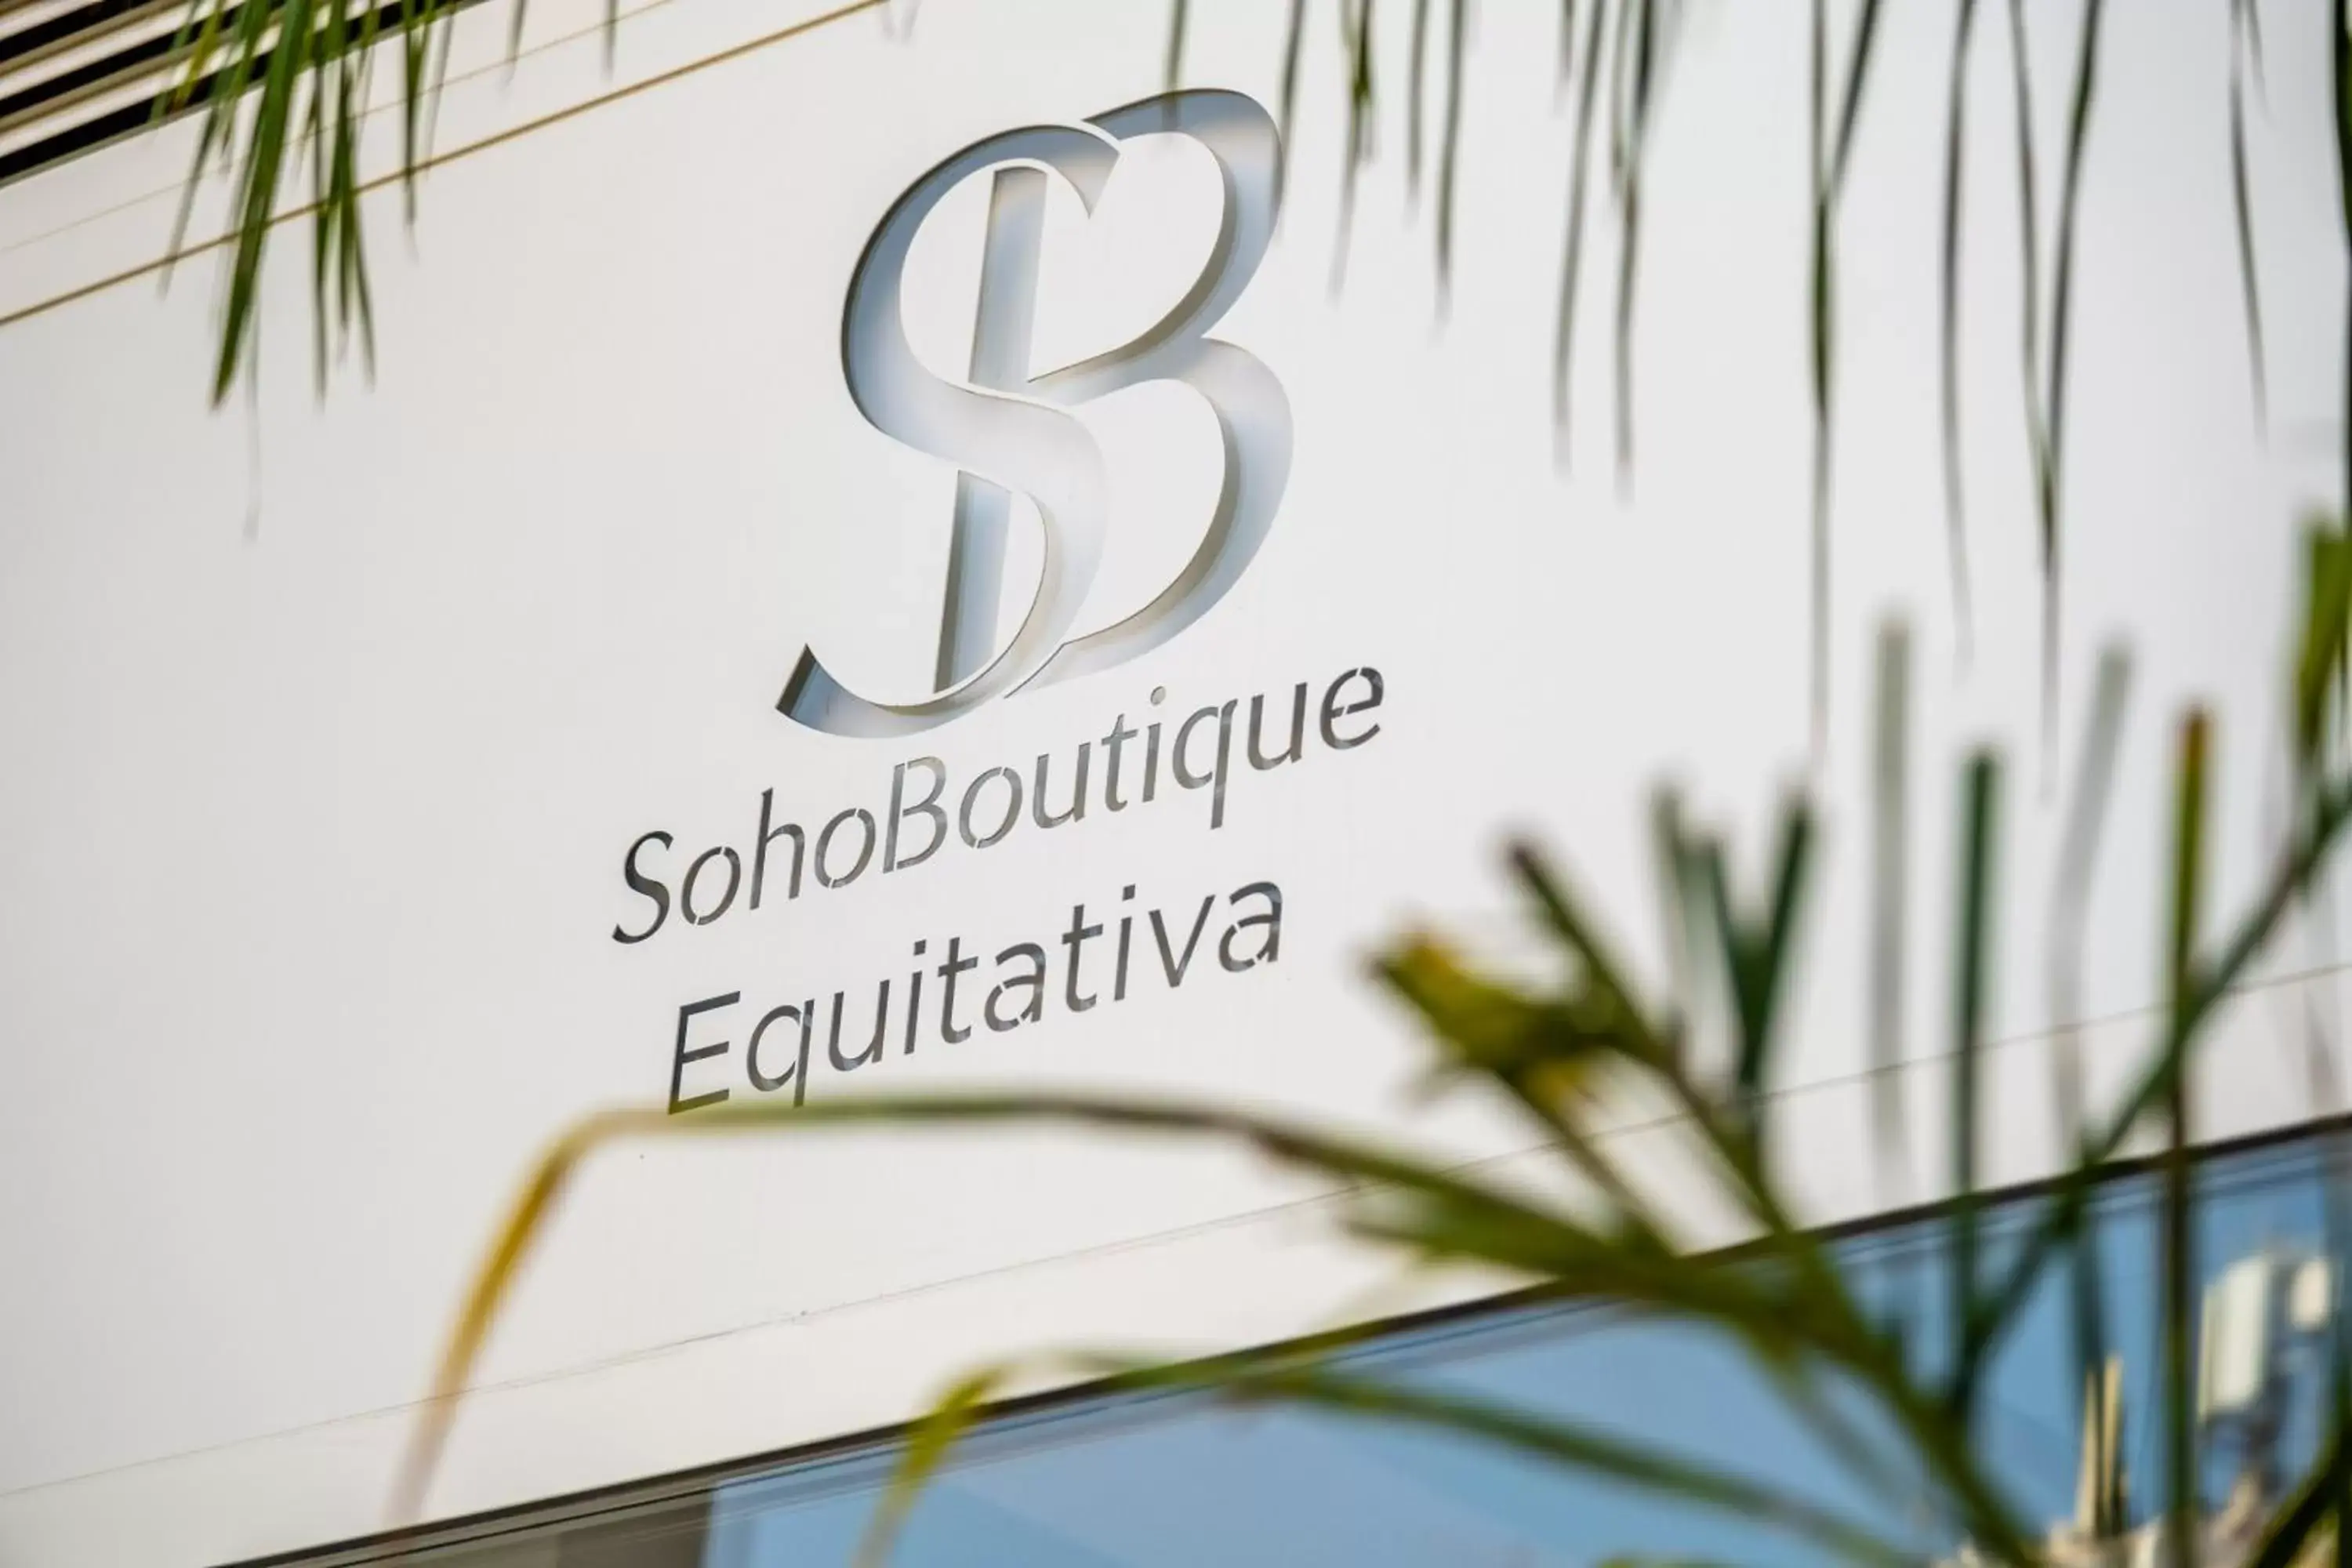 Property building in Soho Boutique Equitativa